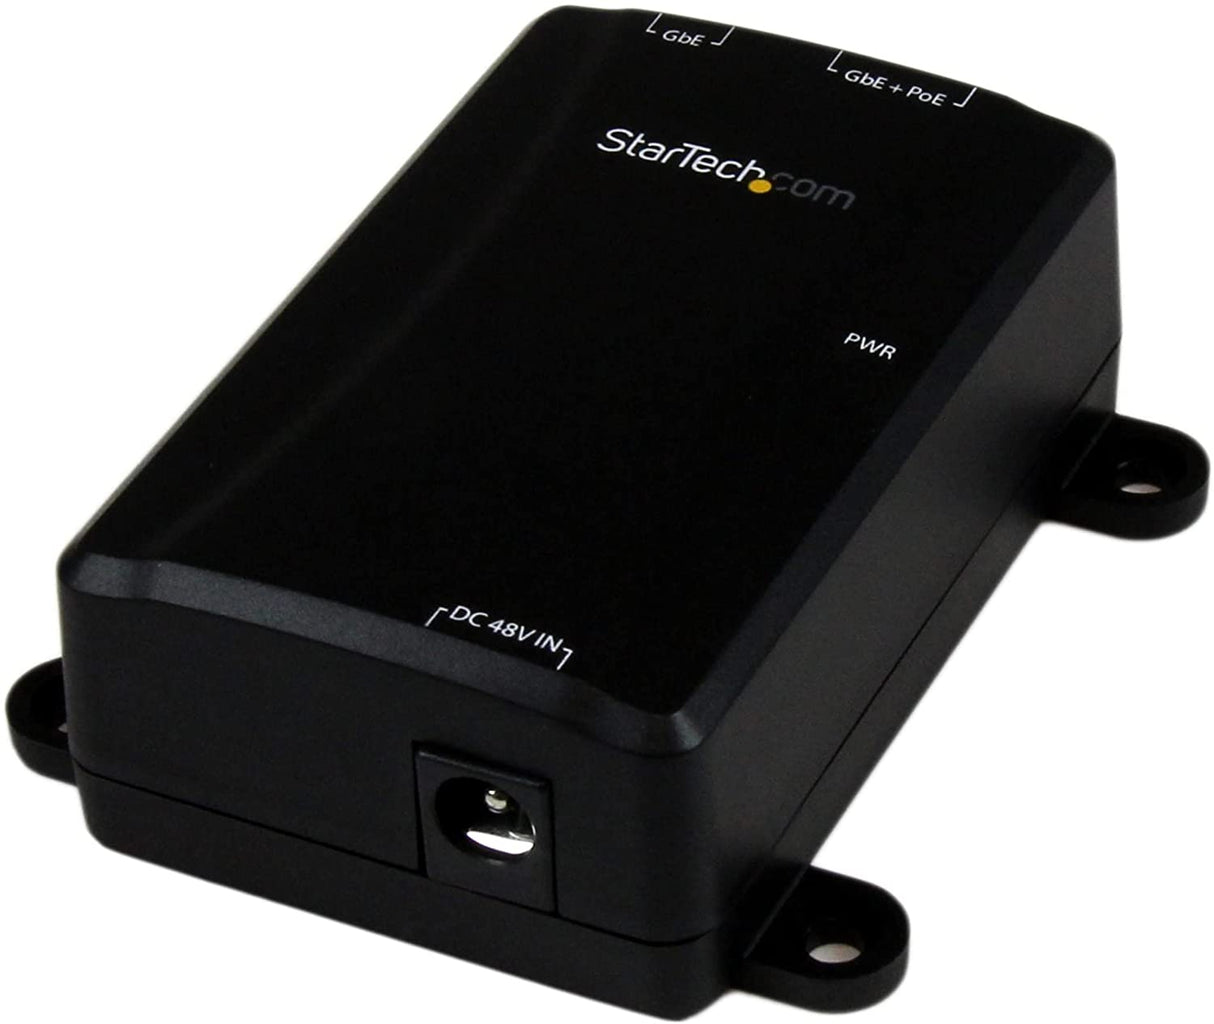 StarTech.com 1 Port Gigabit Midspan - PoE+ Injector - 802.3at and 802.3af - Wall-Mountable Power over Ethernet Injector Adapter (POEINJ1G) , Black Standard